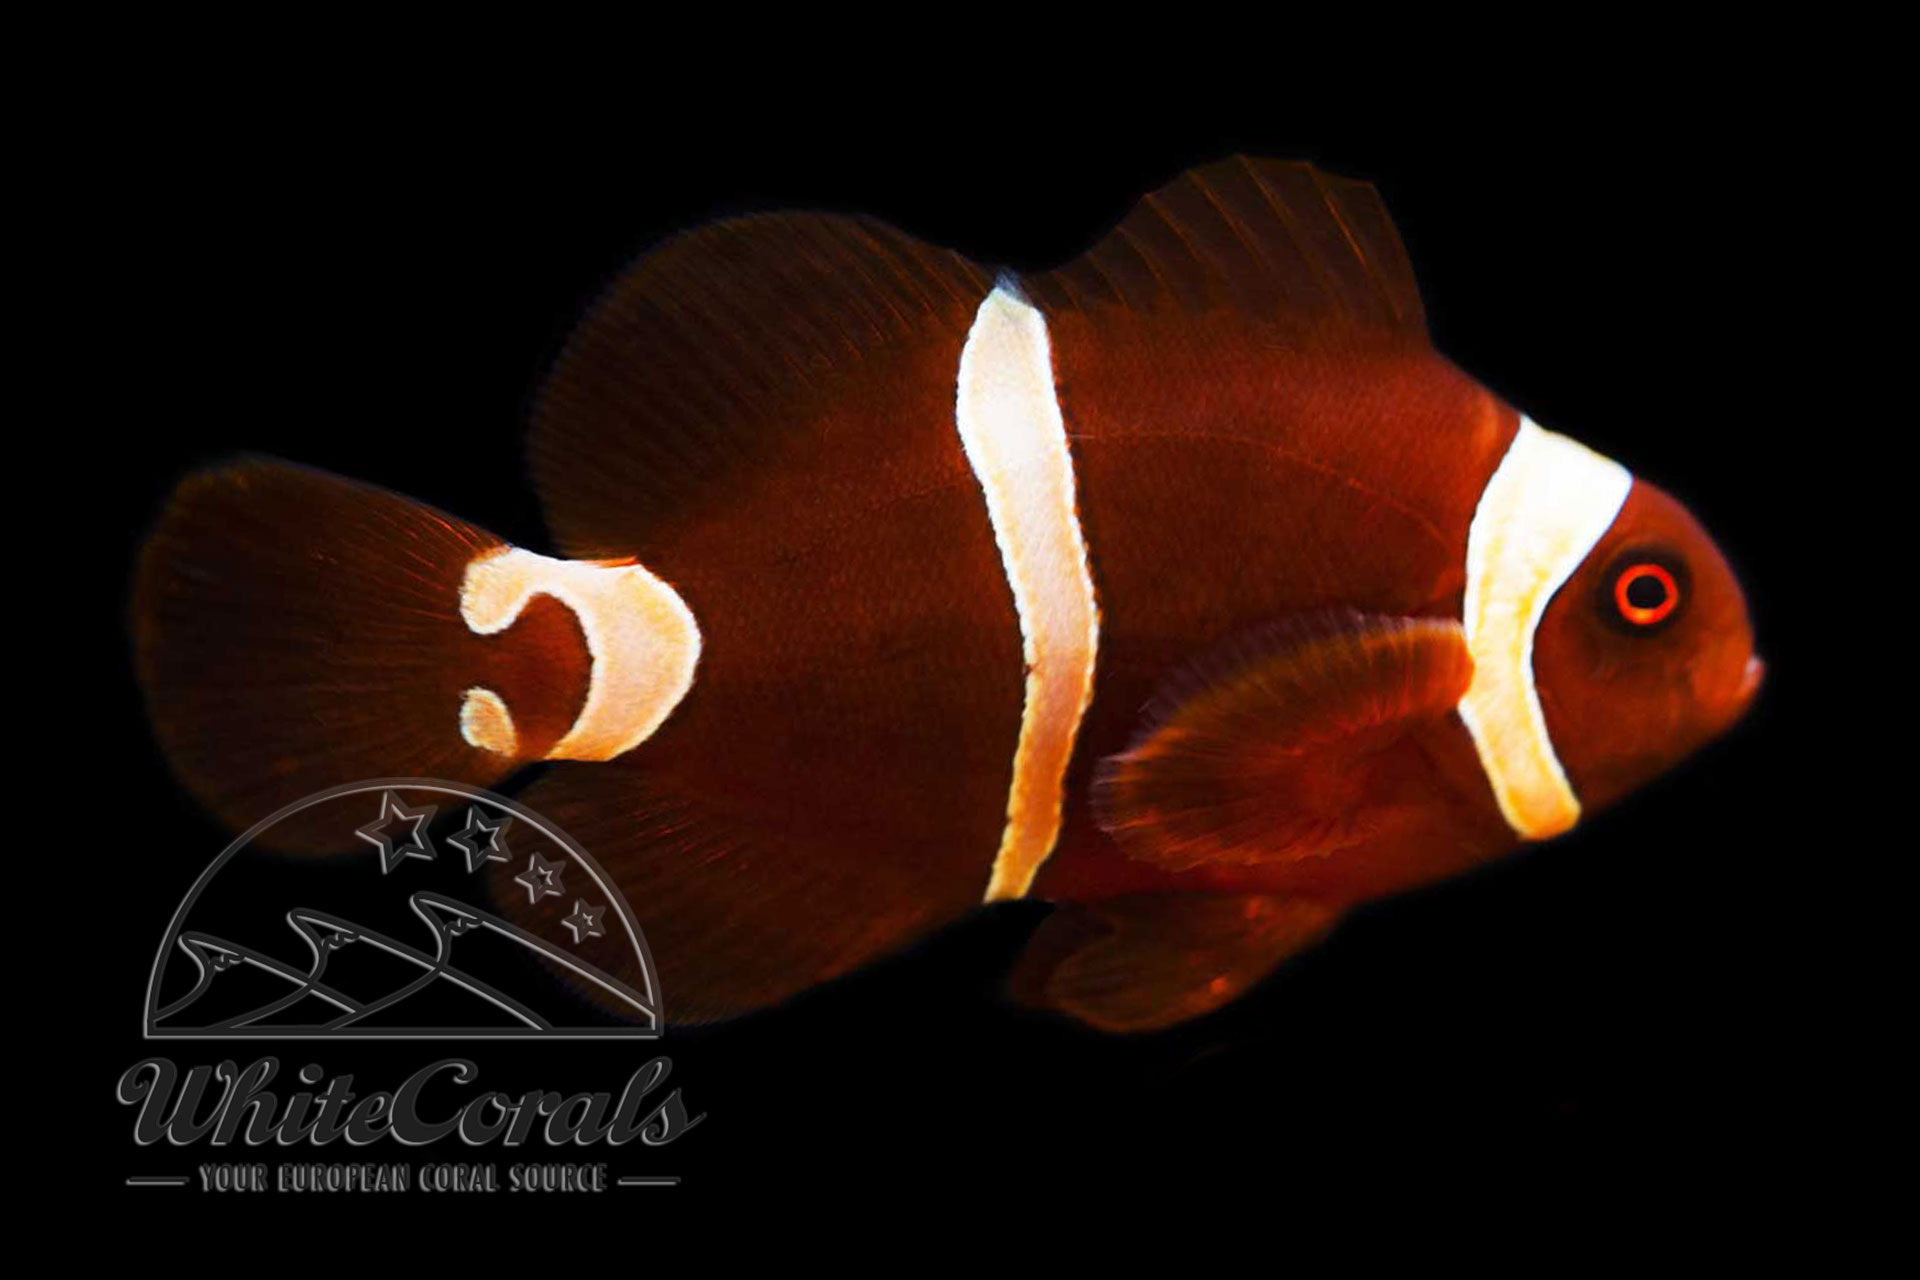 Premnas biaculeatus - Maroon Goldflake Clownfisch